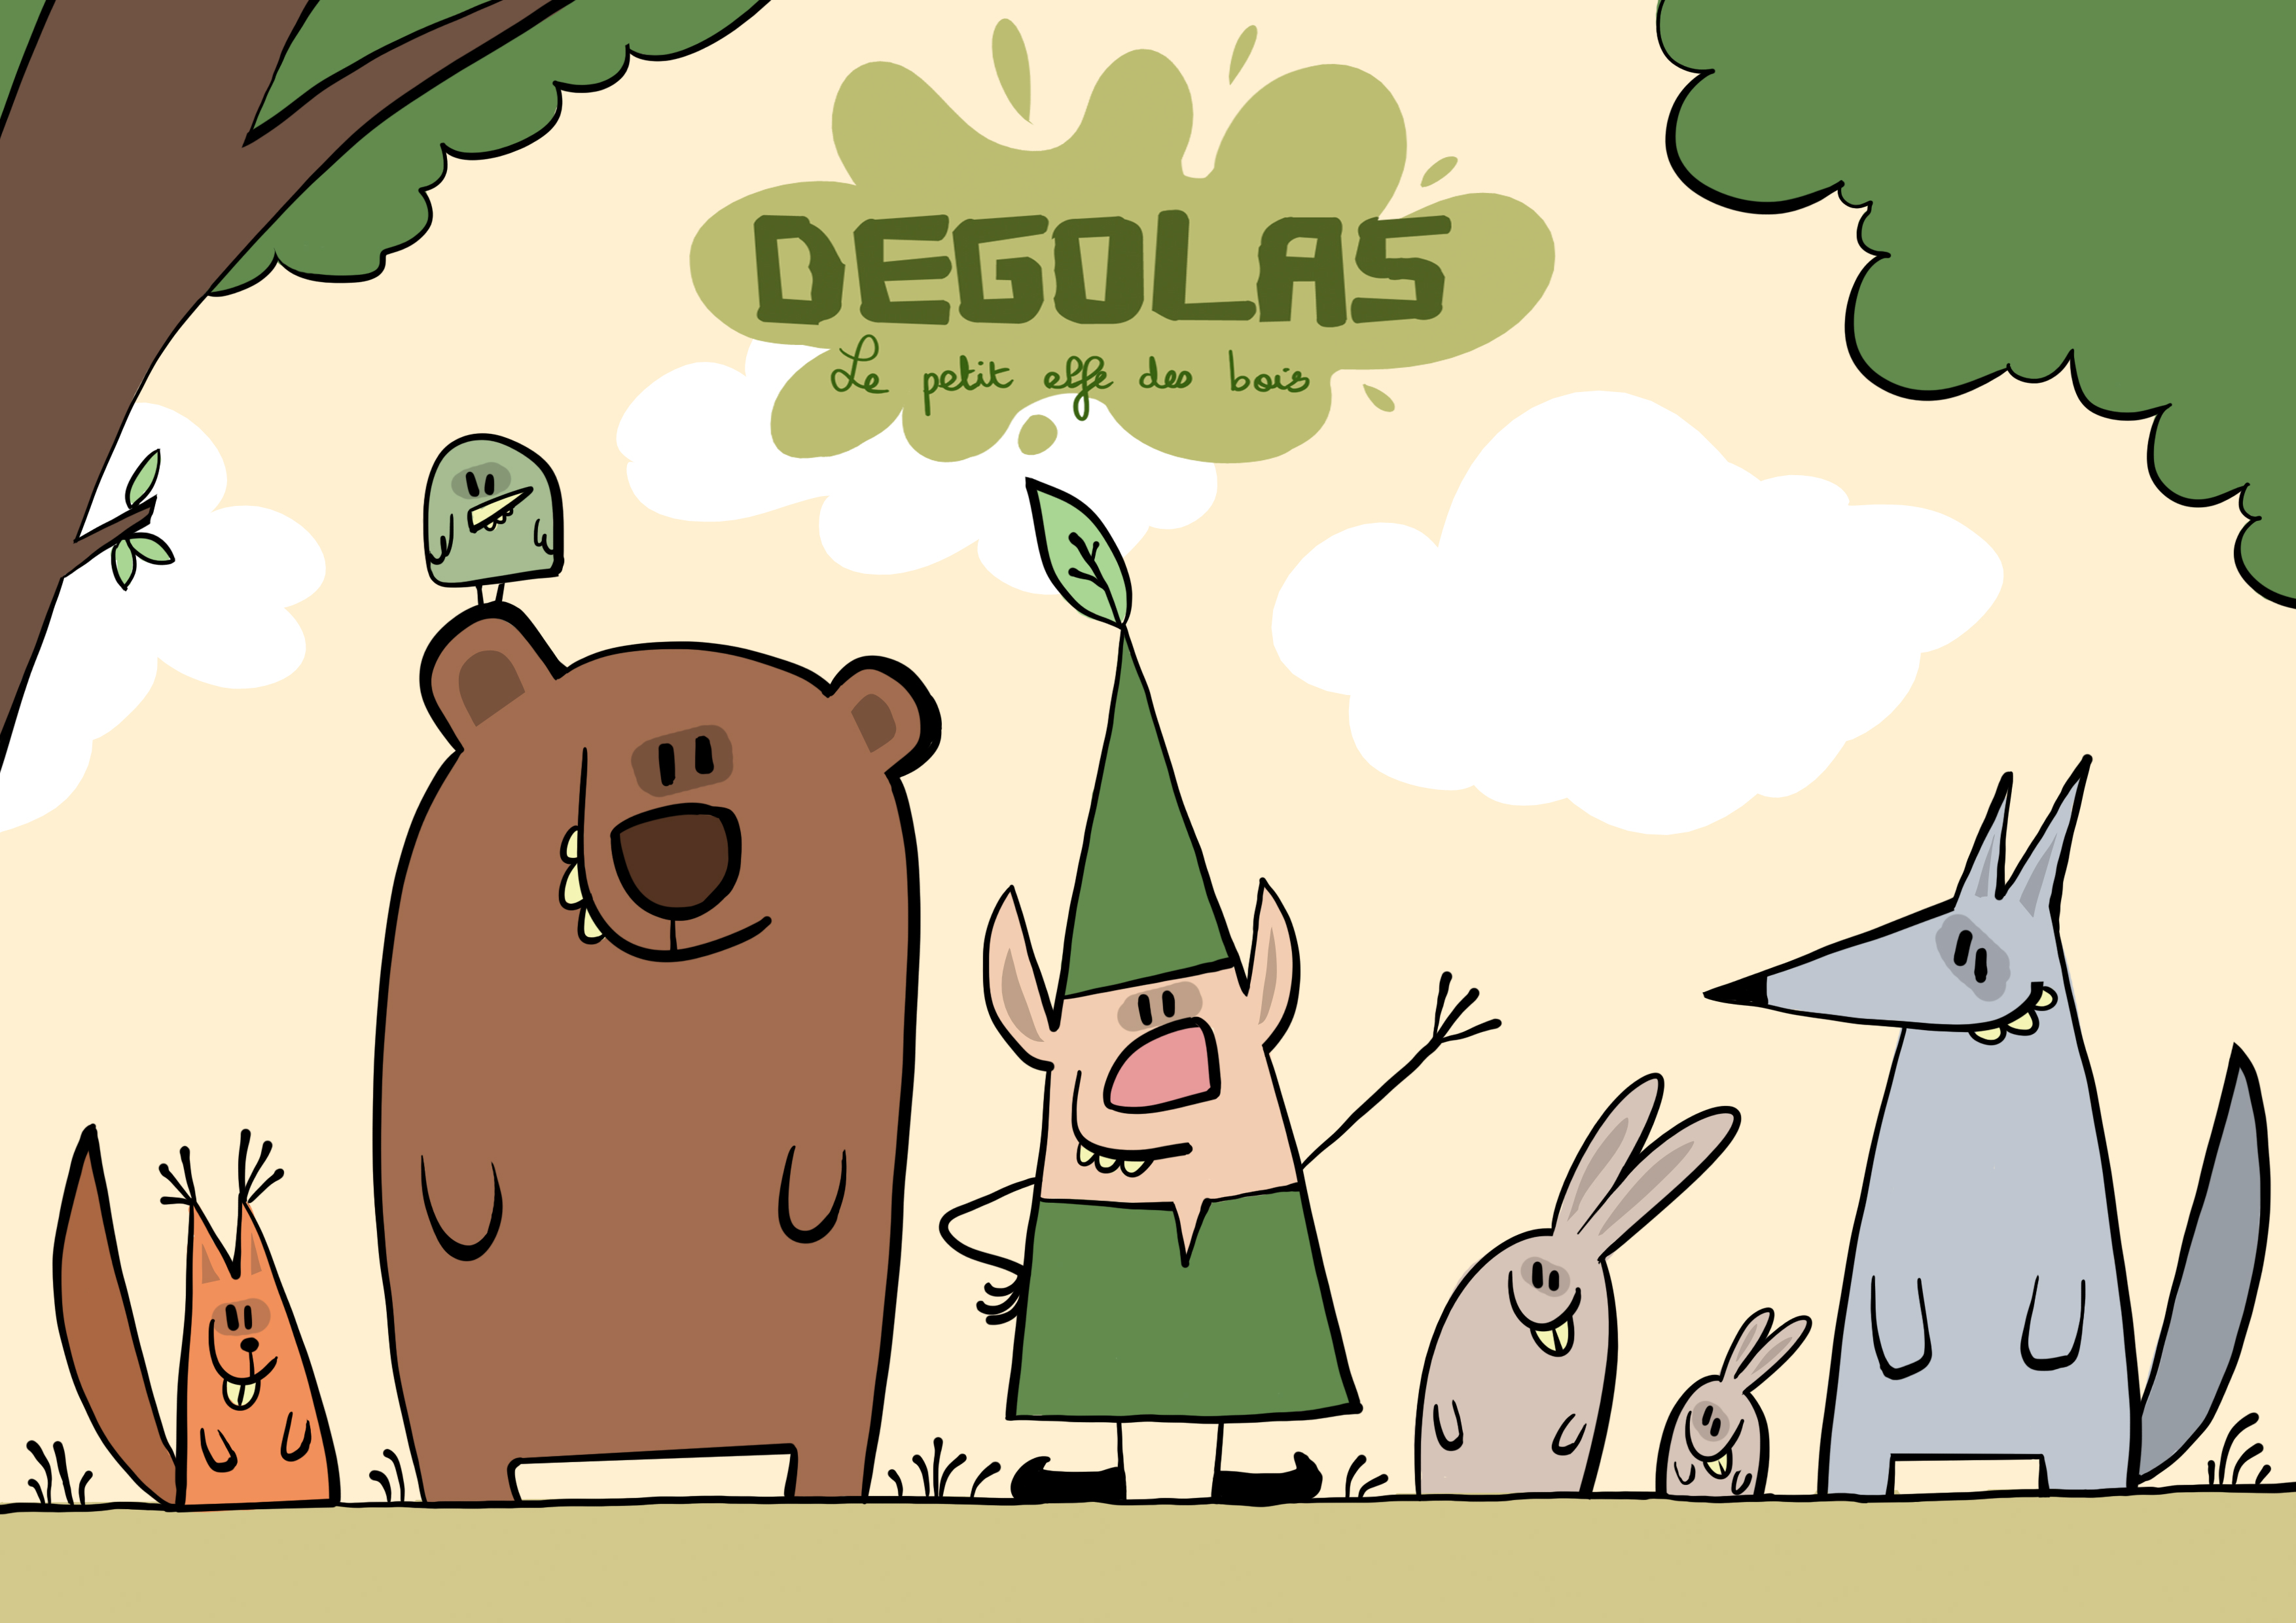 Degolas / Dégolas (2017)